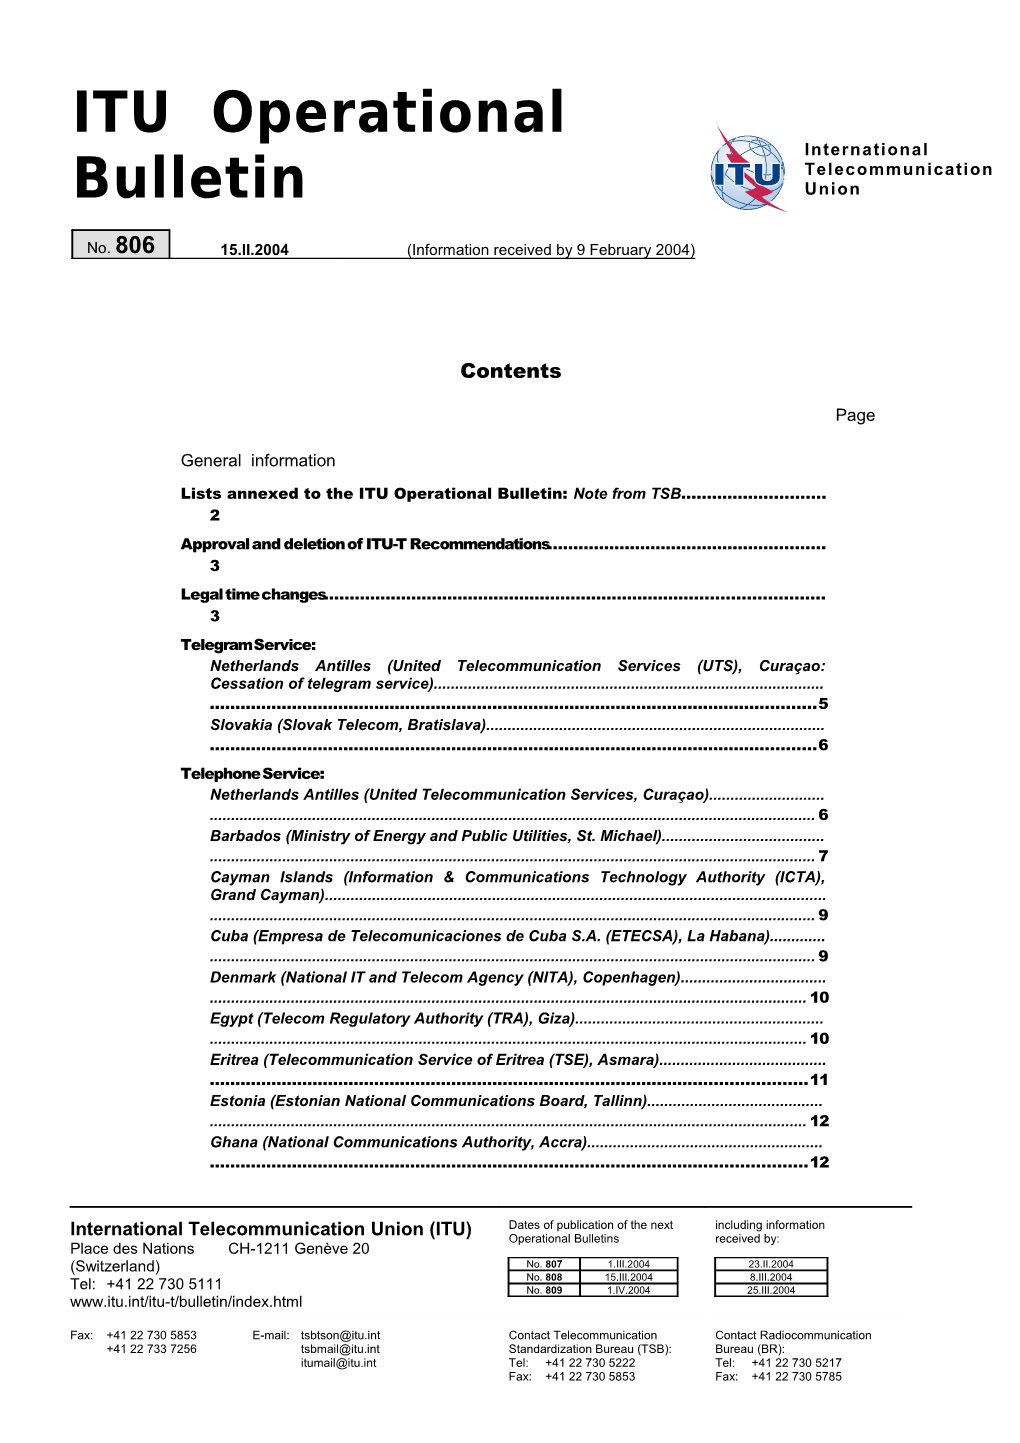 ITU Operational Bulletin No. 806 - 15.II.2003